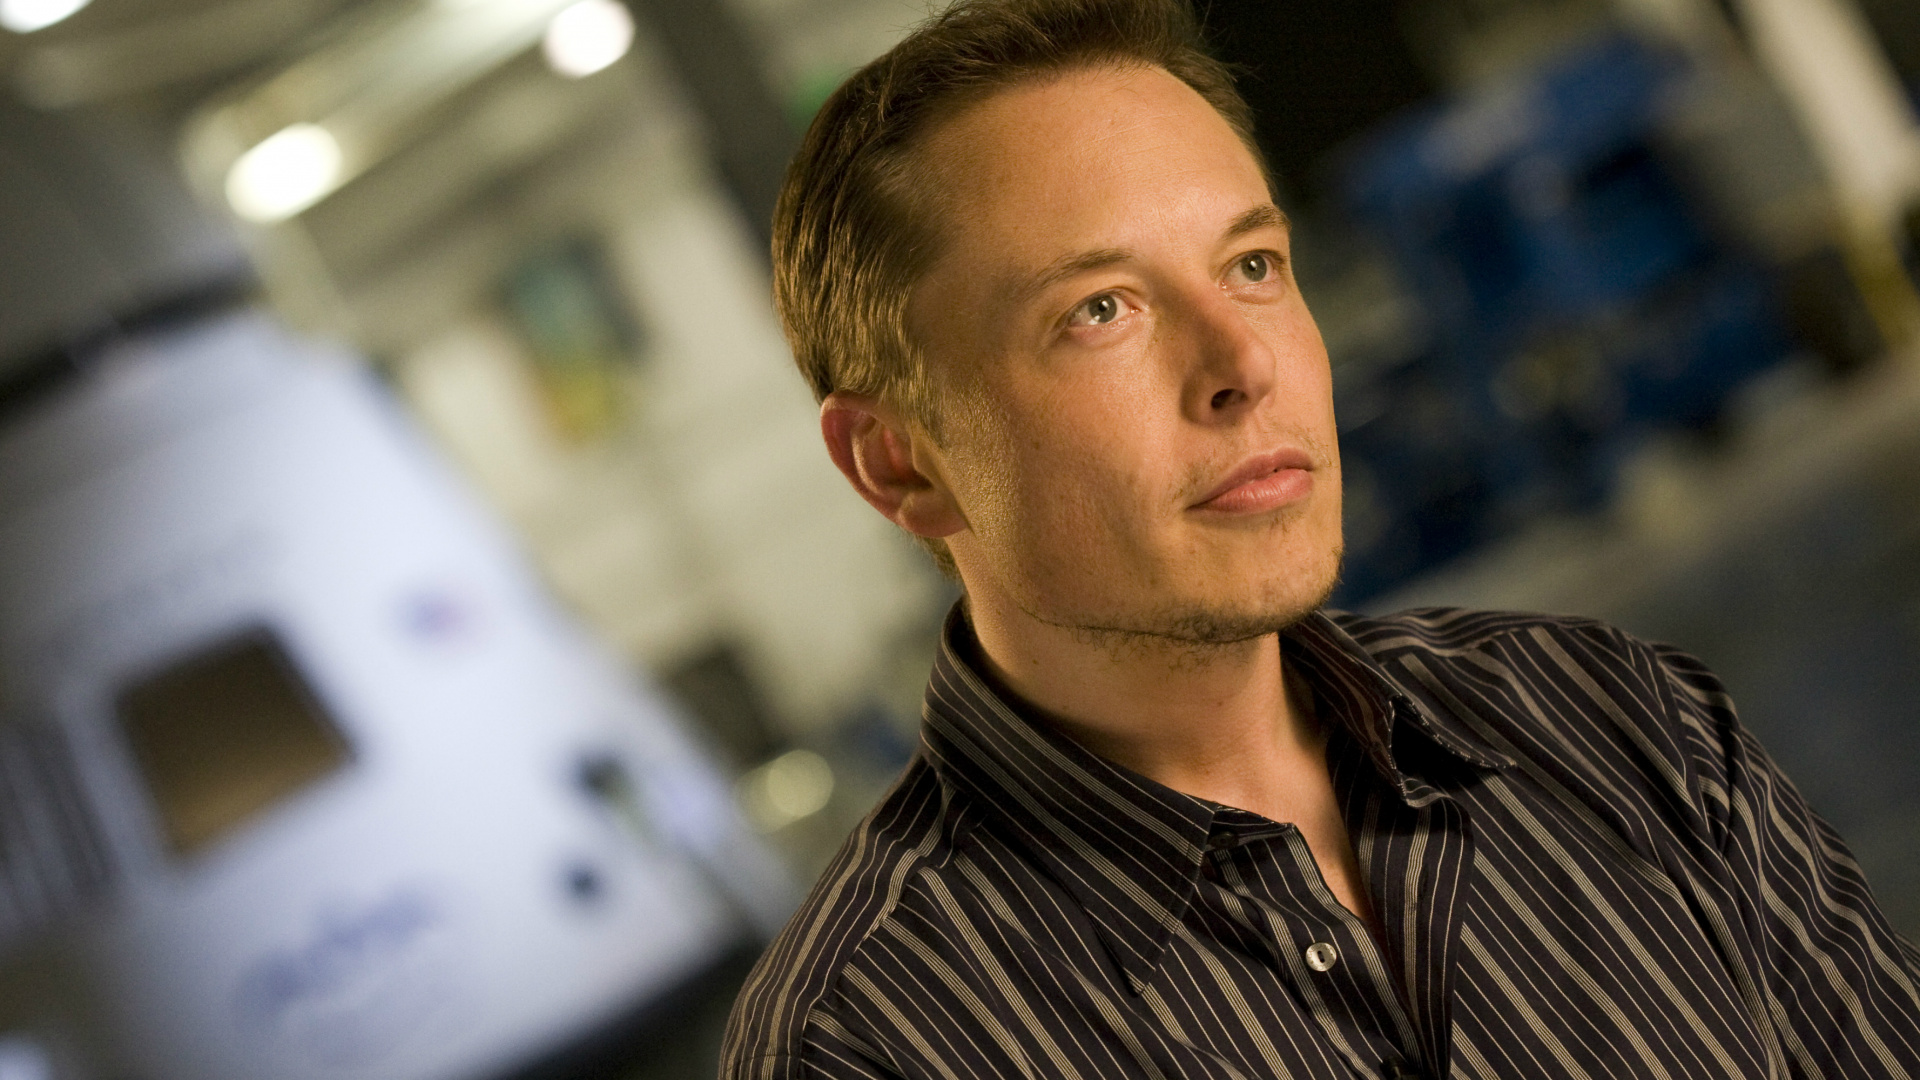 Elon Musk, SpaceX, Hyperloop, White Collar Worker, Gesichtsbehaarung. Wallpaper in 1920x1080 Resolution